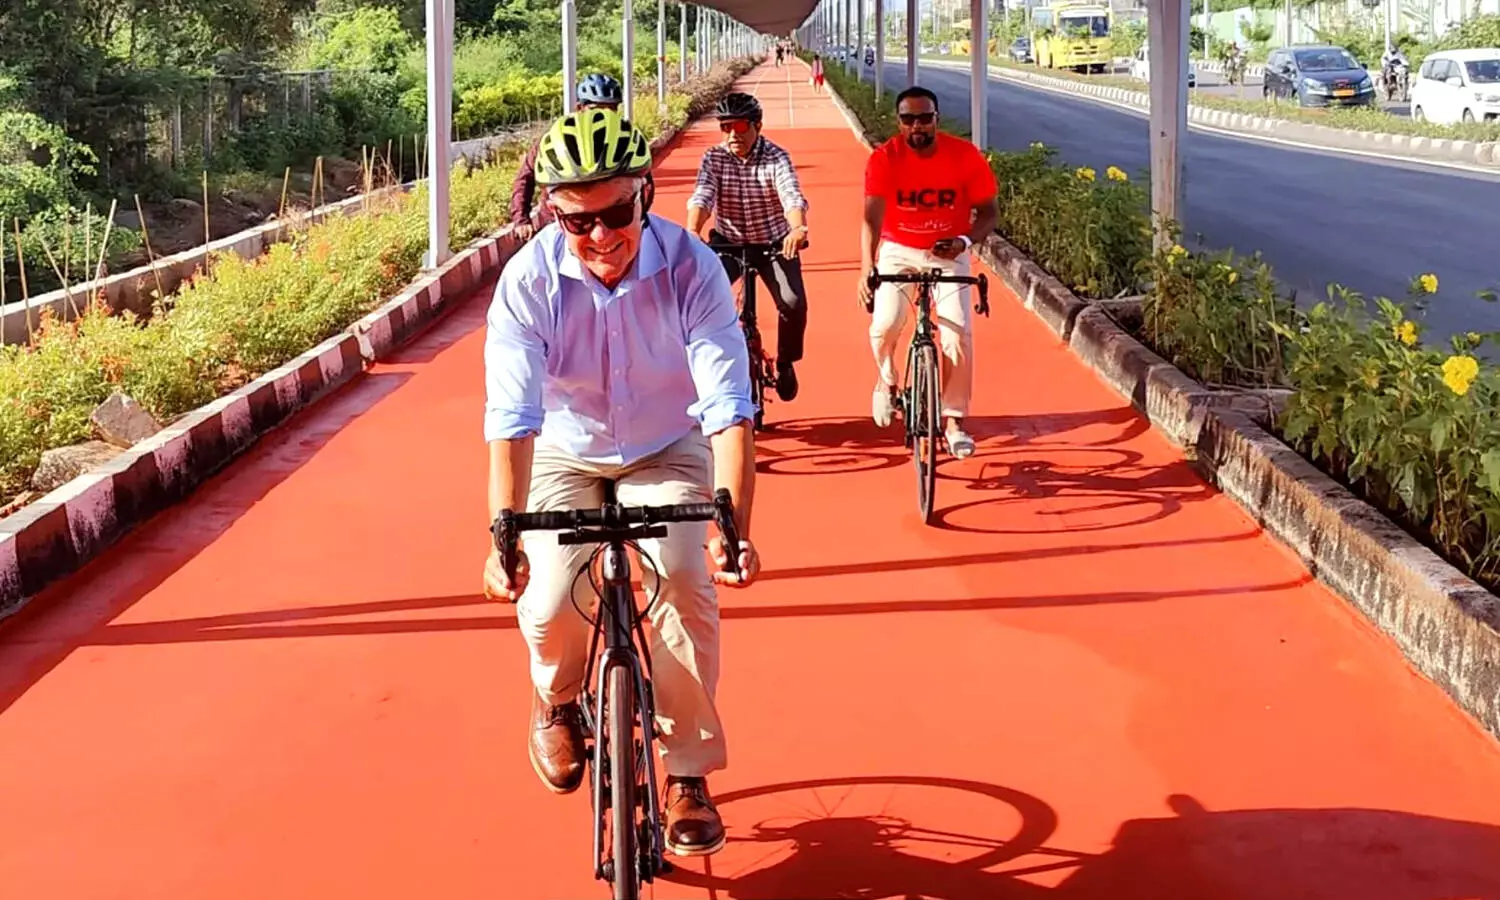 Environmentalist Erik Solheim applauds KTR for building solar-roof cycling track in Hyderabad